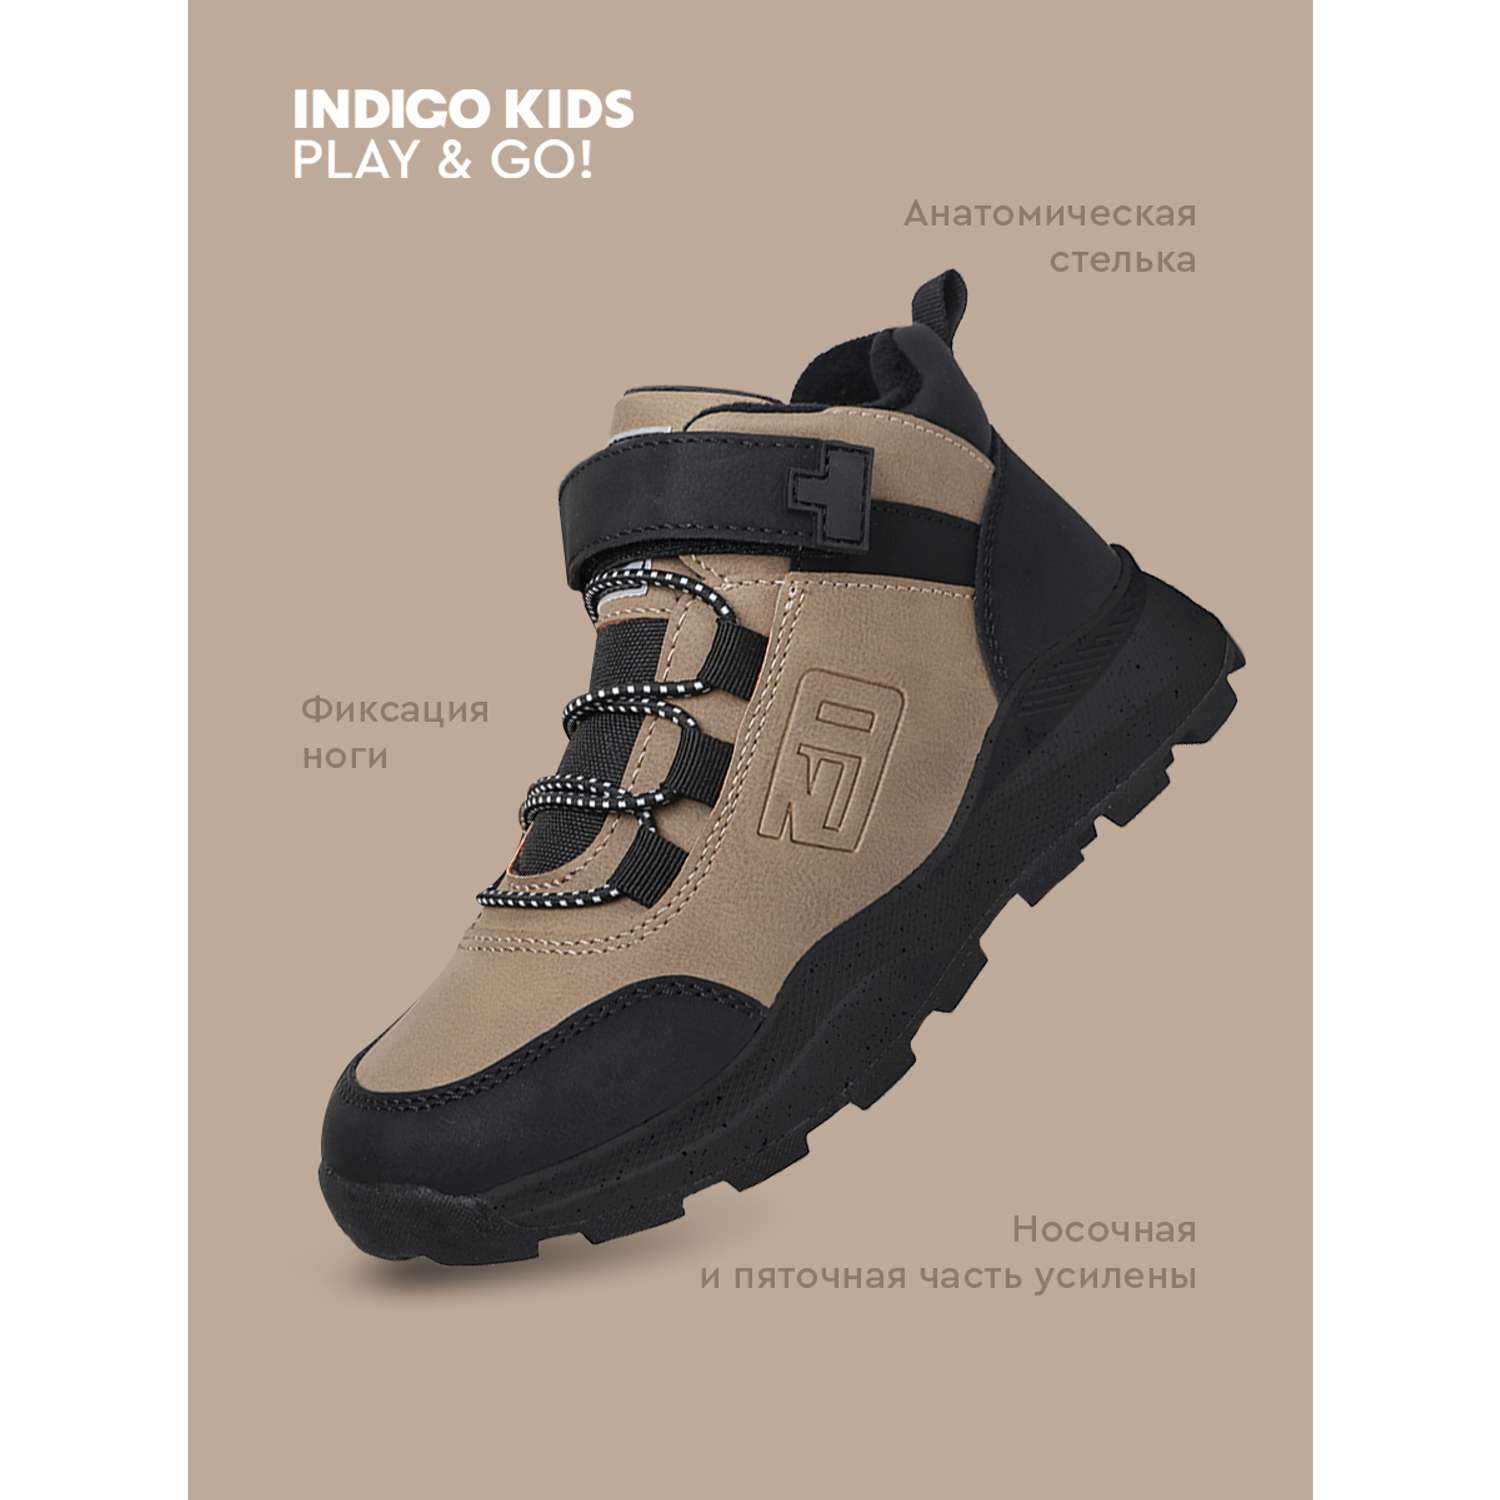 Ботинки Indigo kids 54-0020A - фото 6